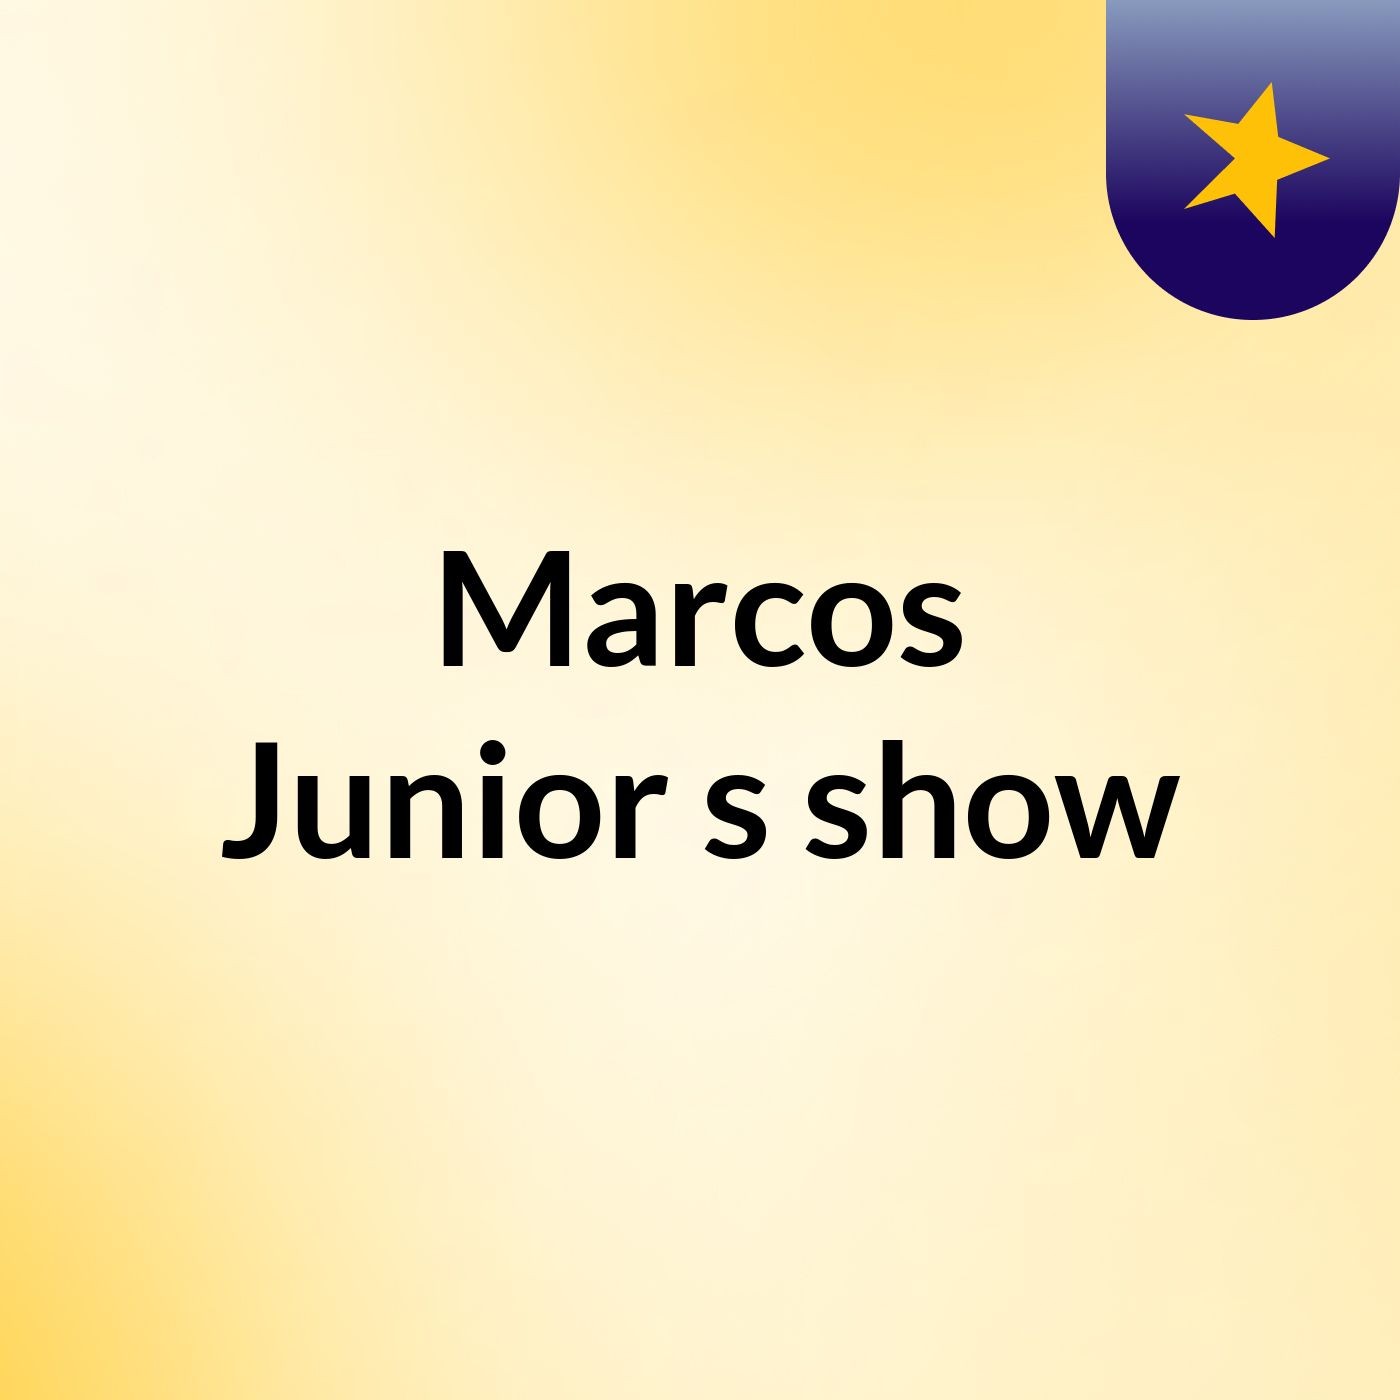 Marcos Junior's show